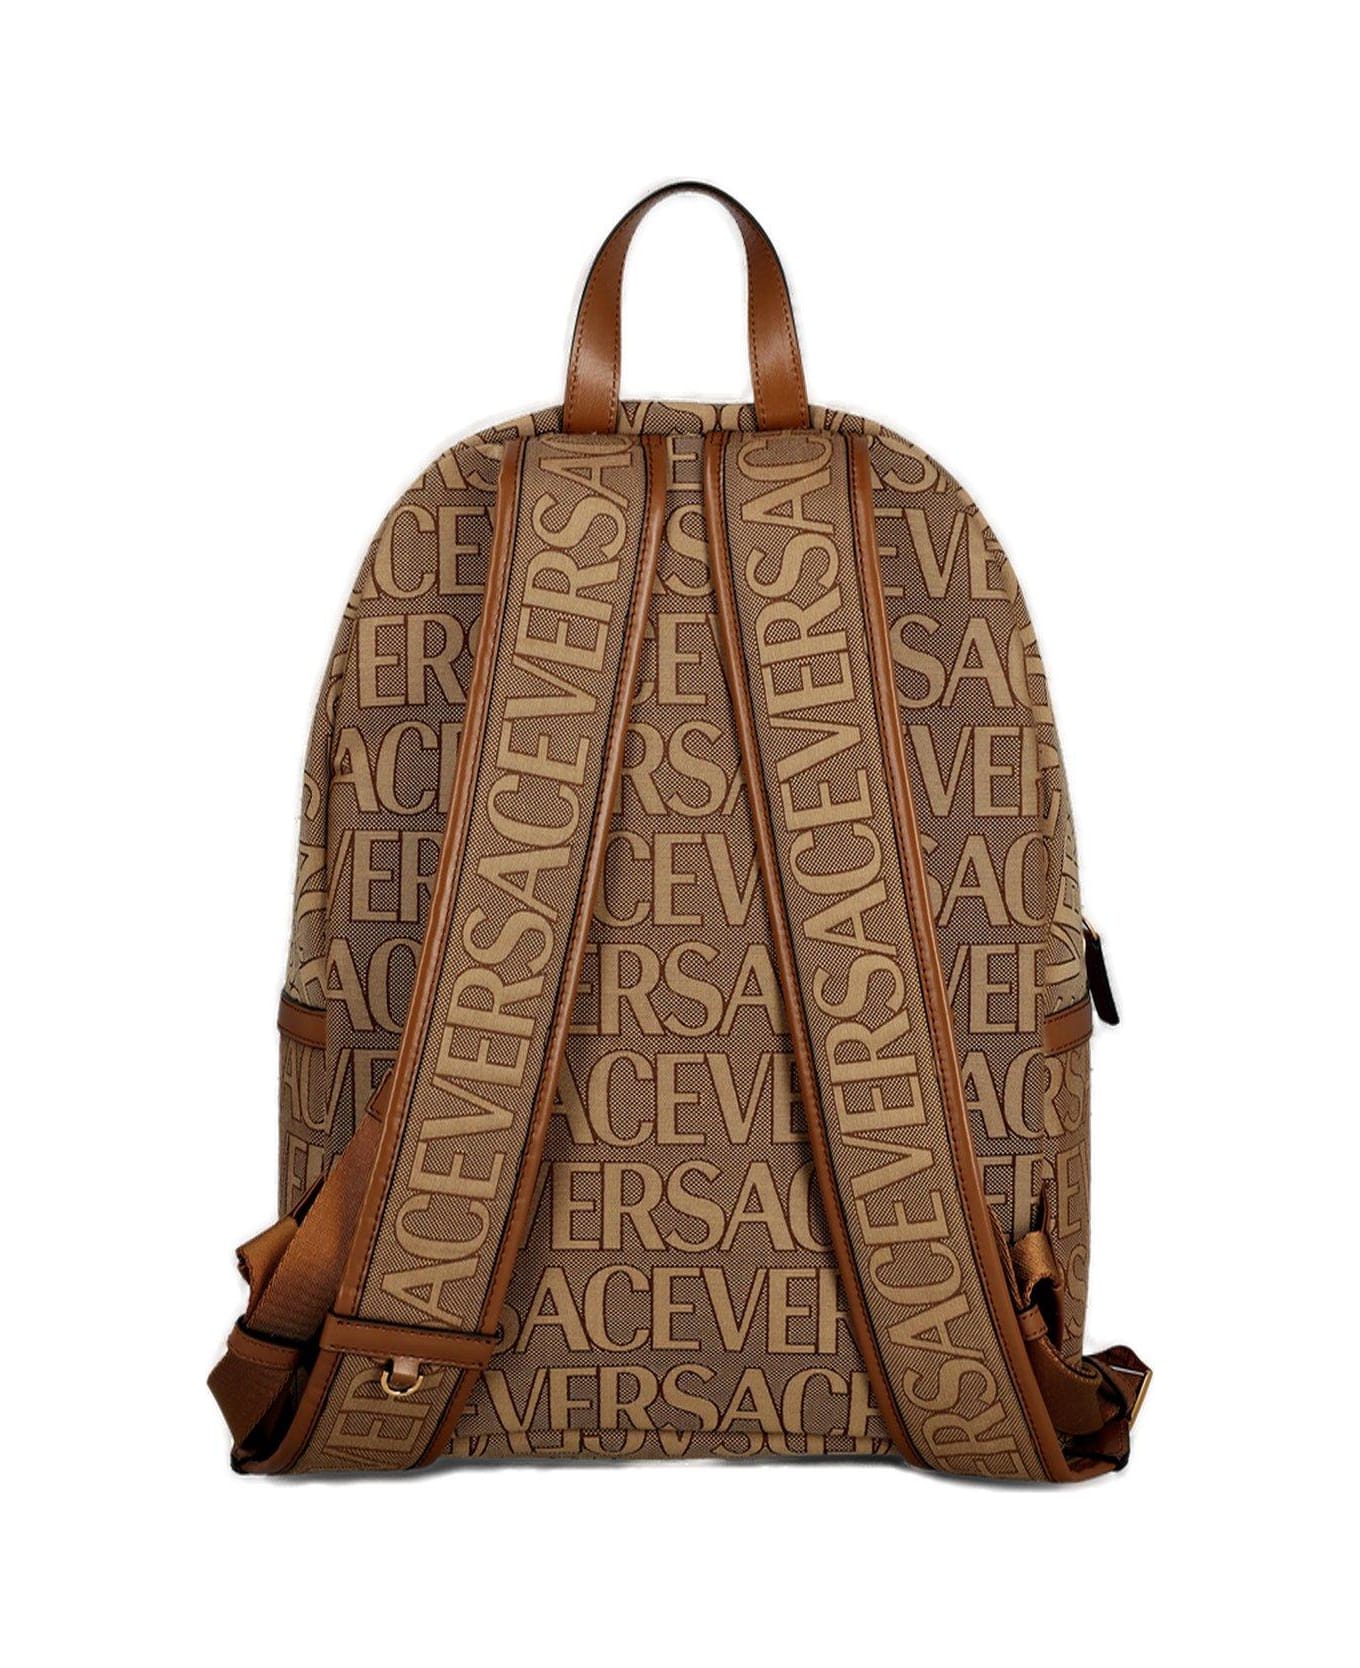 Versace Allover Backpack - BEIGE BROWN バックパック